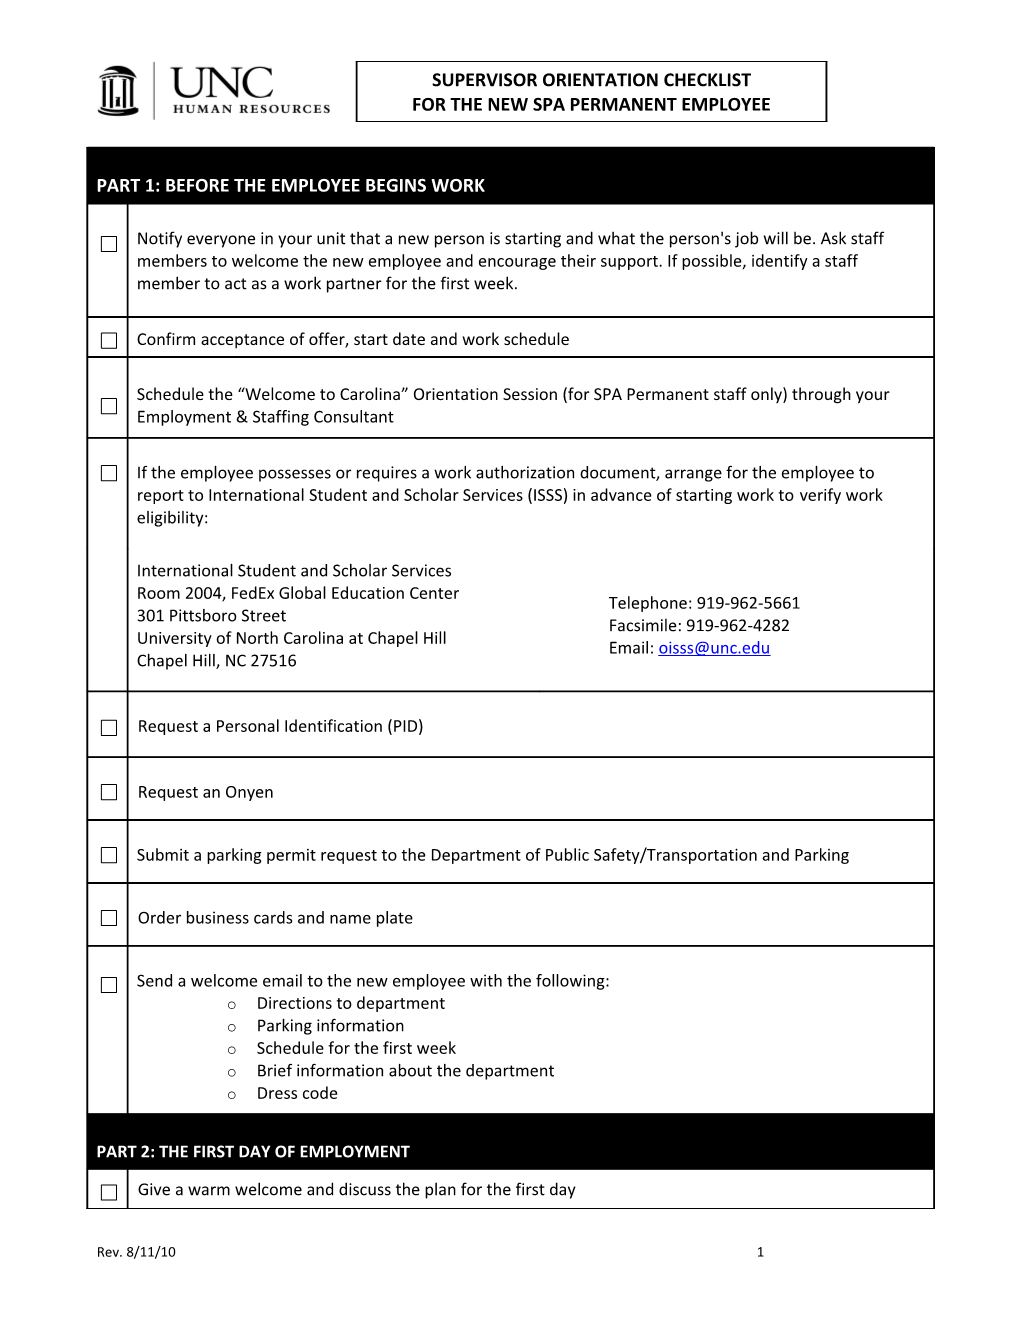 Orientation Checklist for Supervisors